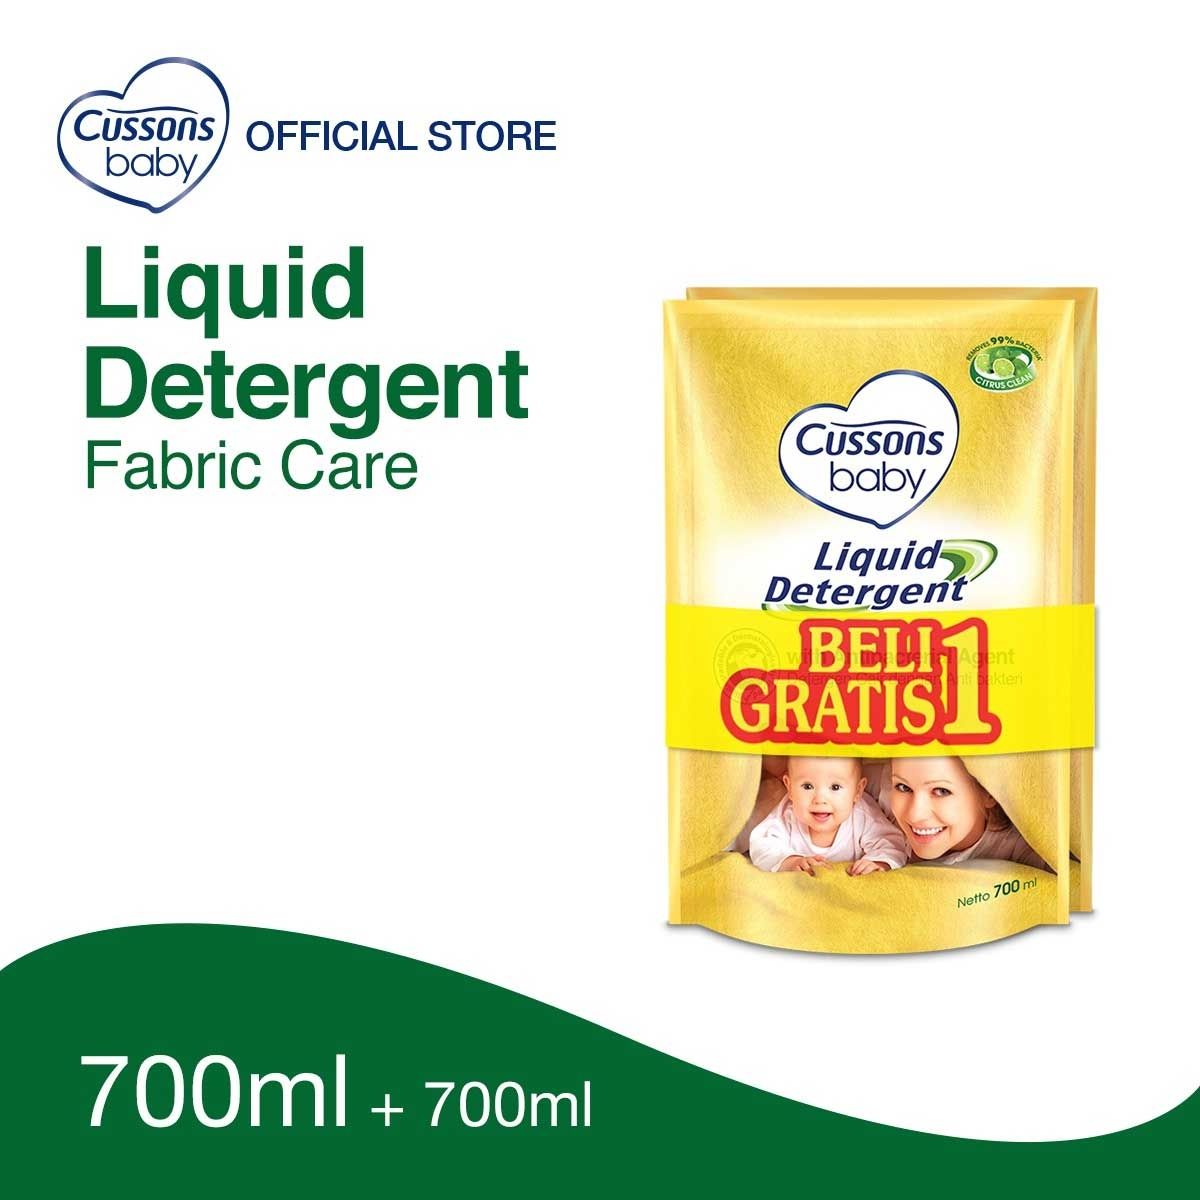 Cussons Buy 1 Get 1 Baby Liquid Detergent 700ml - 3